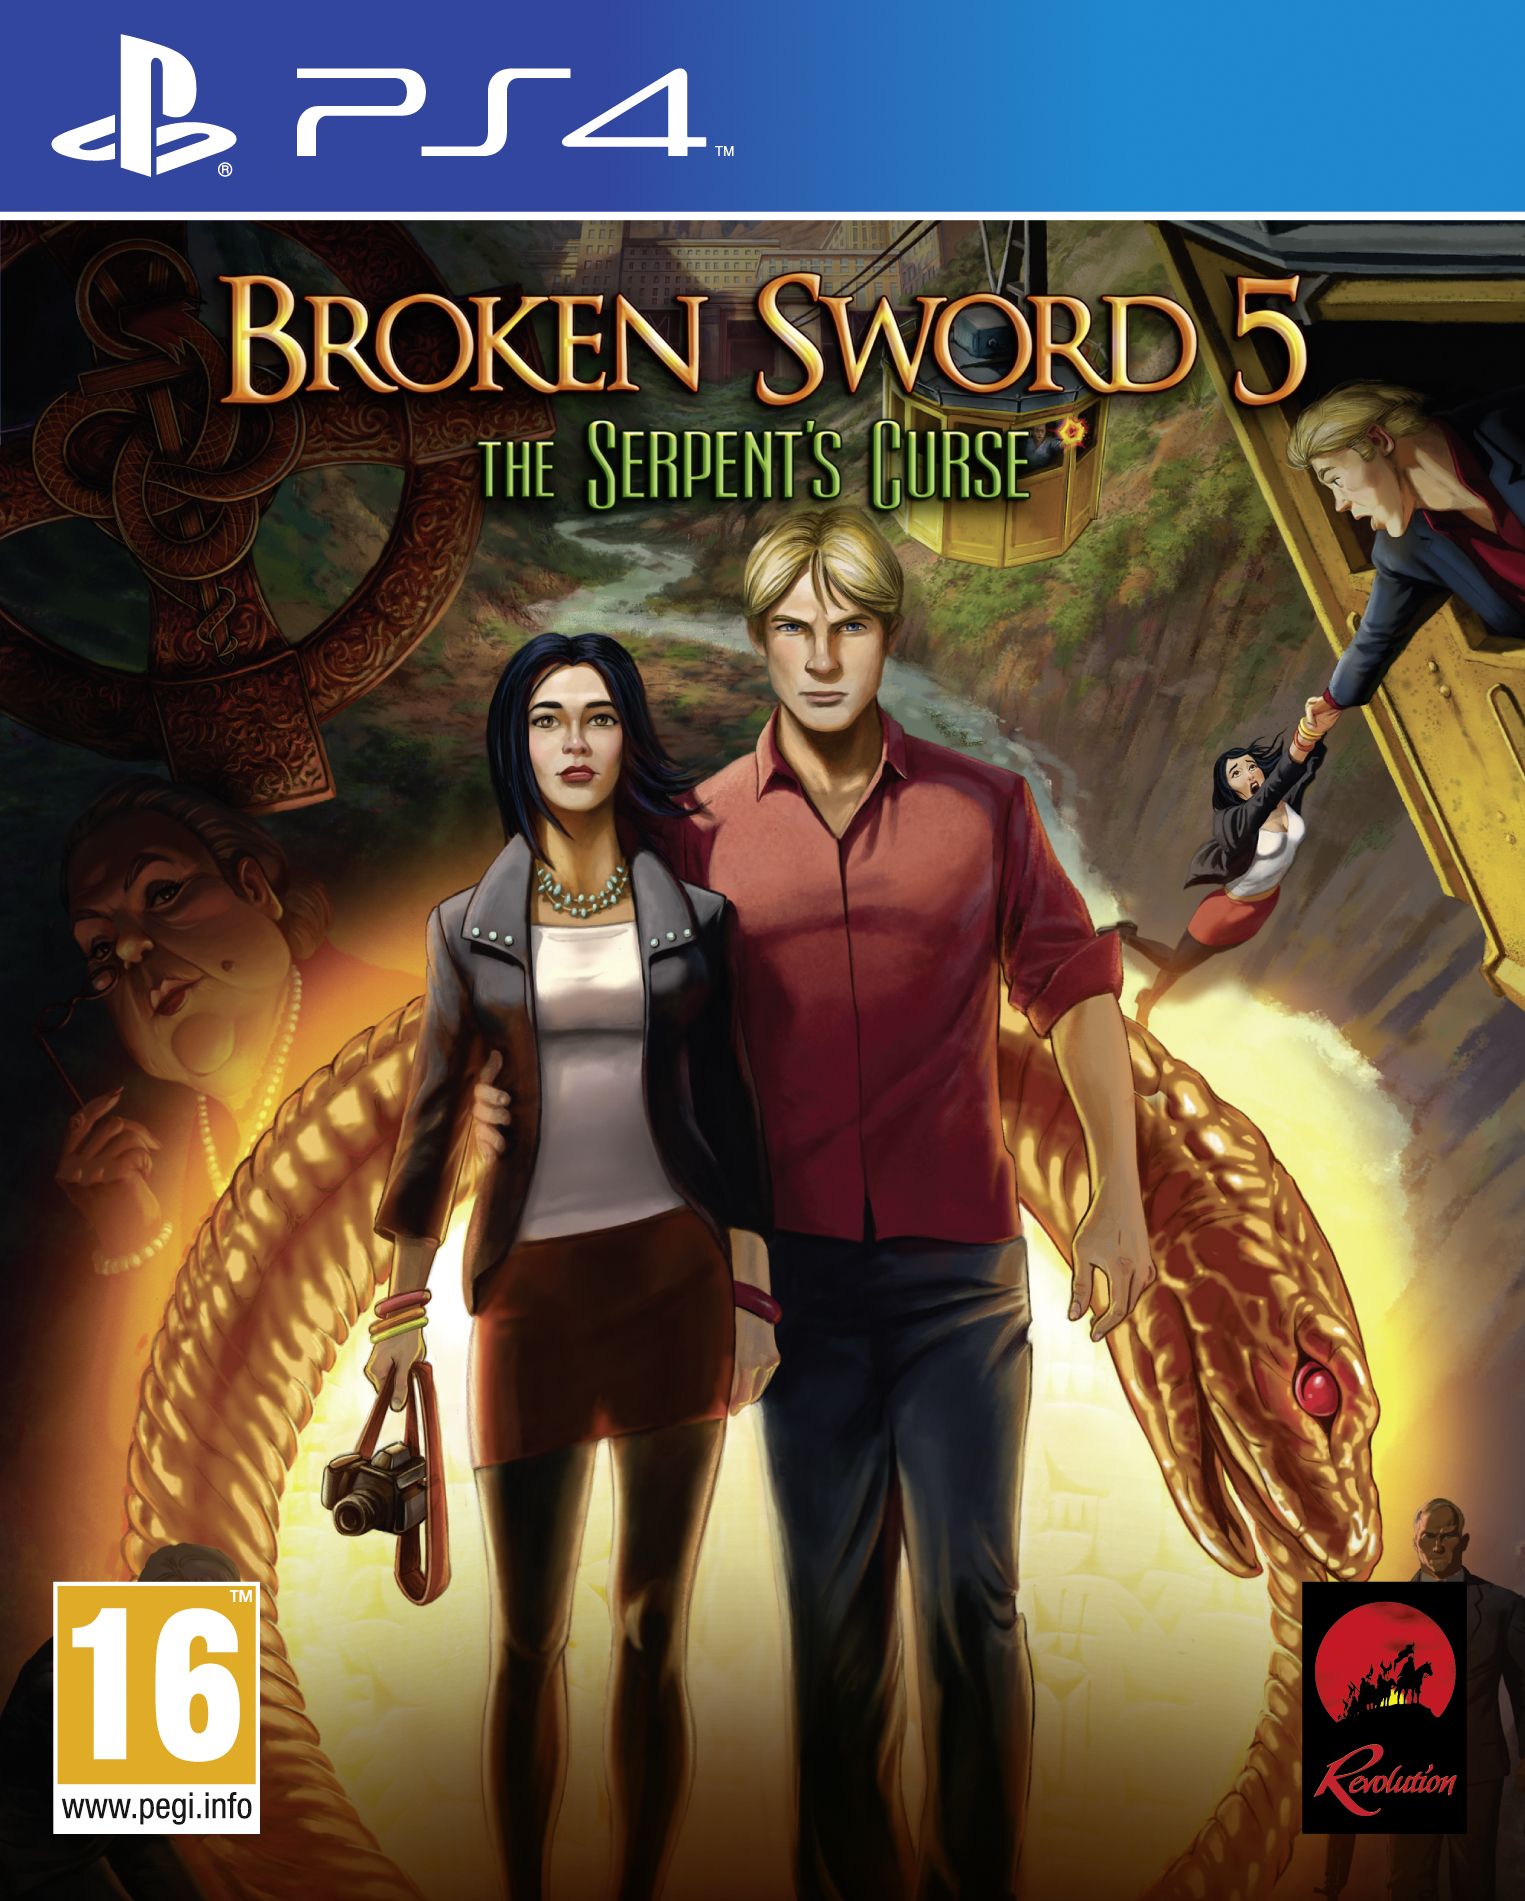 Broken Sword 5: The Serpent's Curse (PS4), Revolution Software